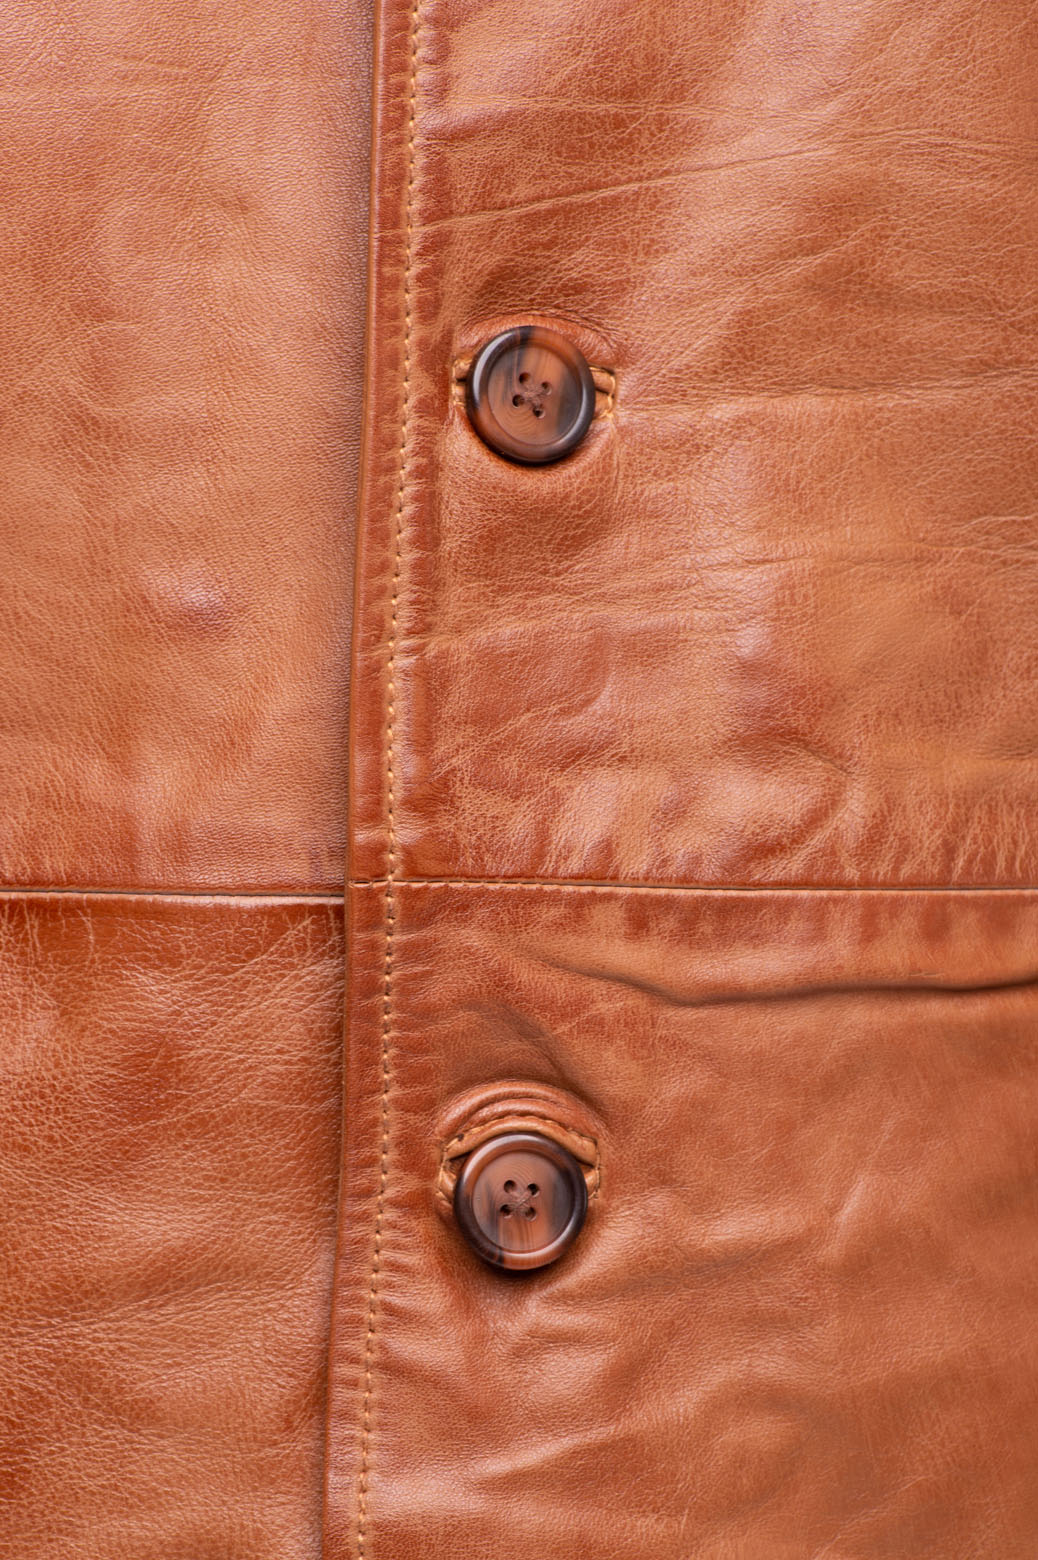 Logan English tan leather trench coat